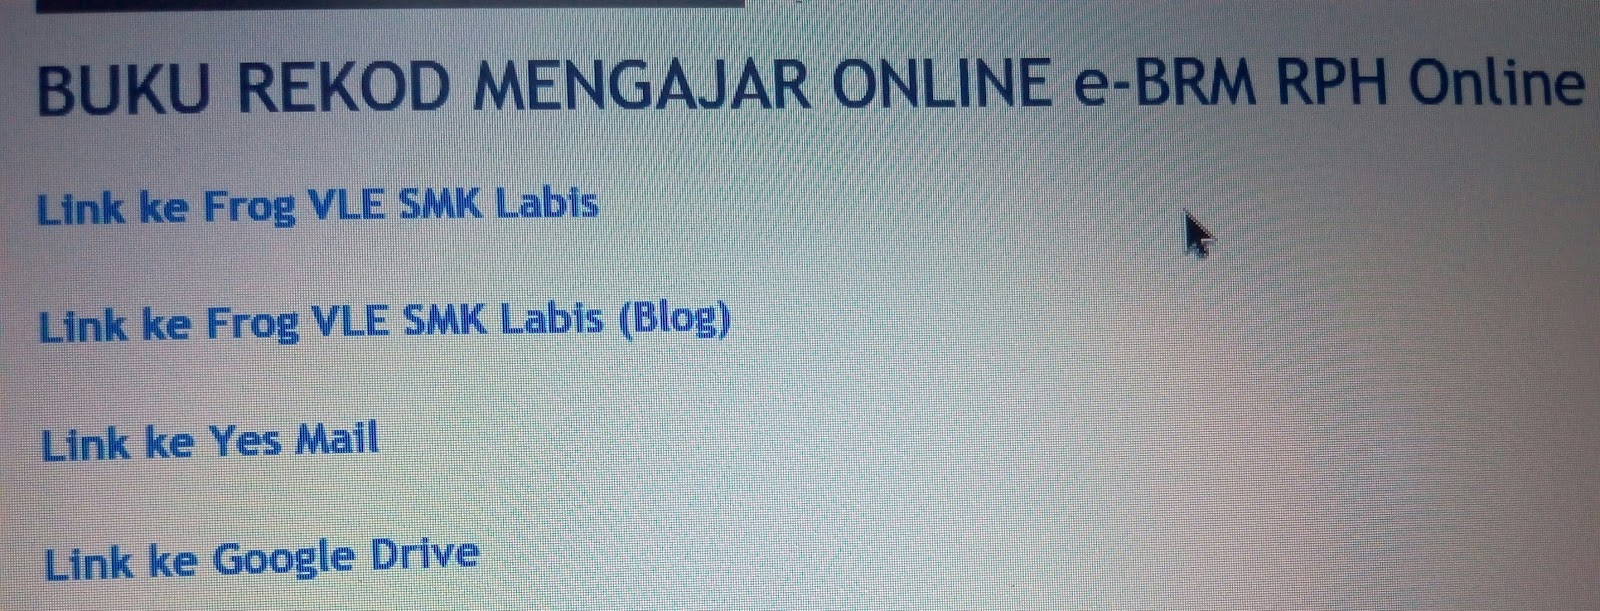 SMK LABIS SEGAMAT: BUKU REKOD MENGAJAR ONLINE e-BRM RPH Online